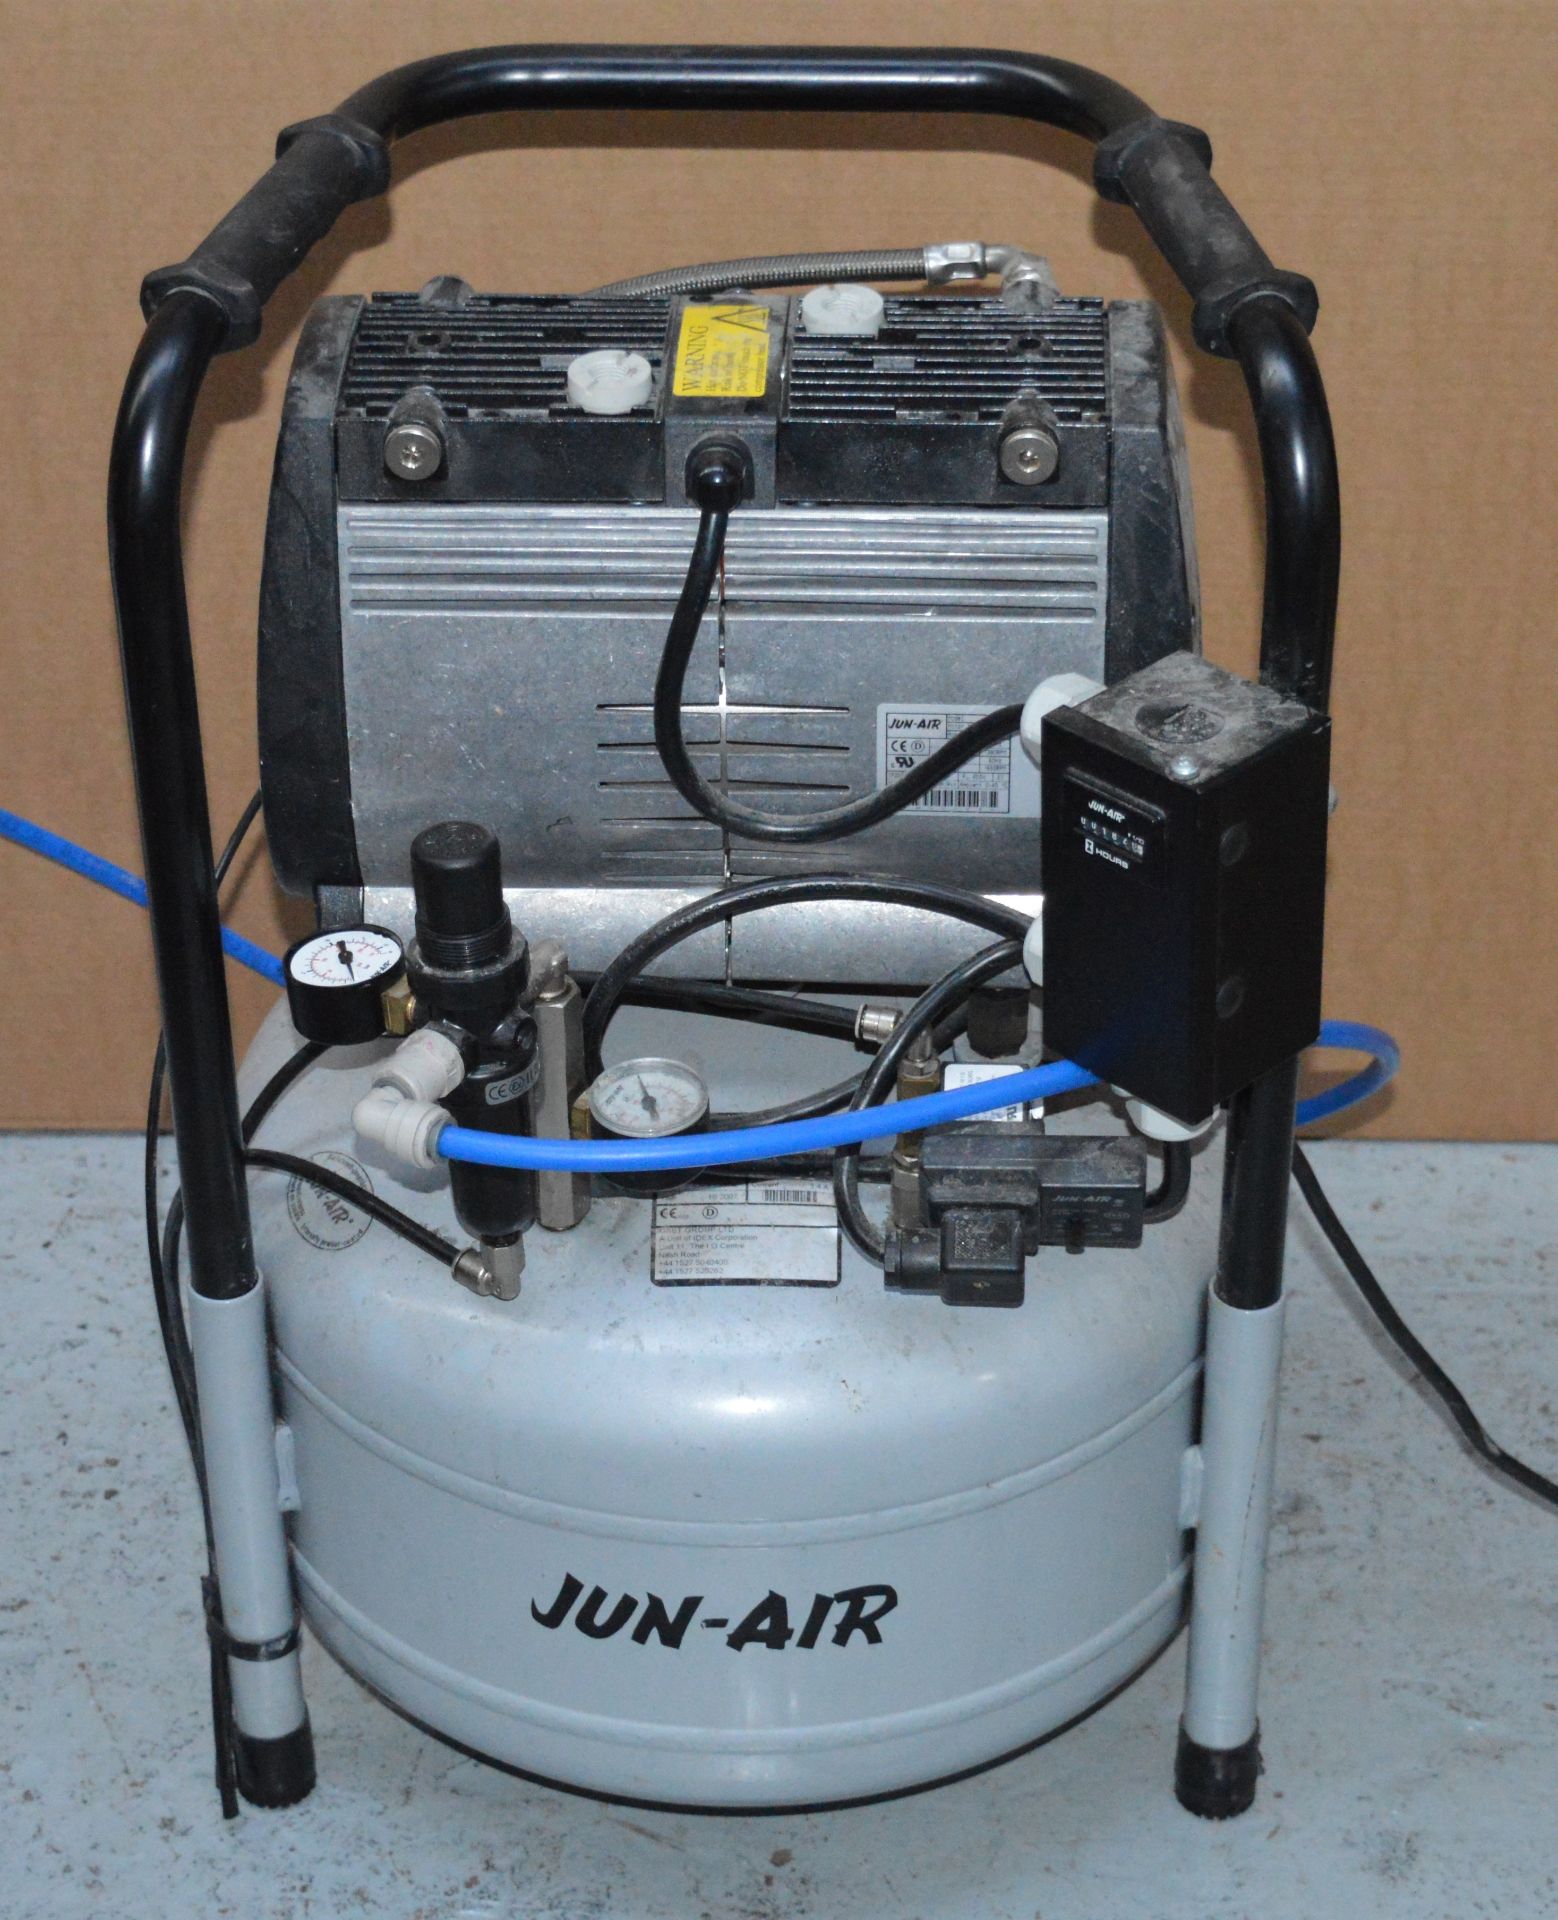 1 x Jun-Air OF302-25B Oil-free 25l Air Compressor - Good Working Order - Quiet Operation - Oil